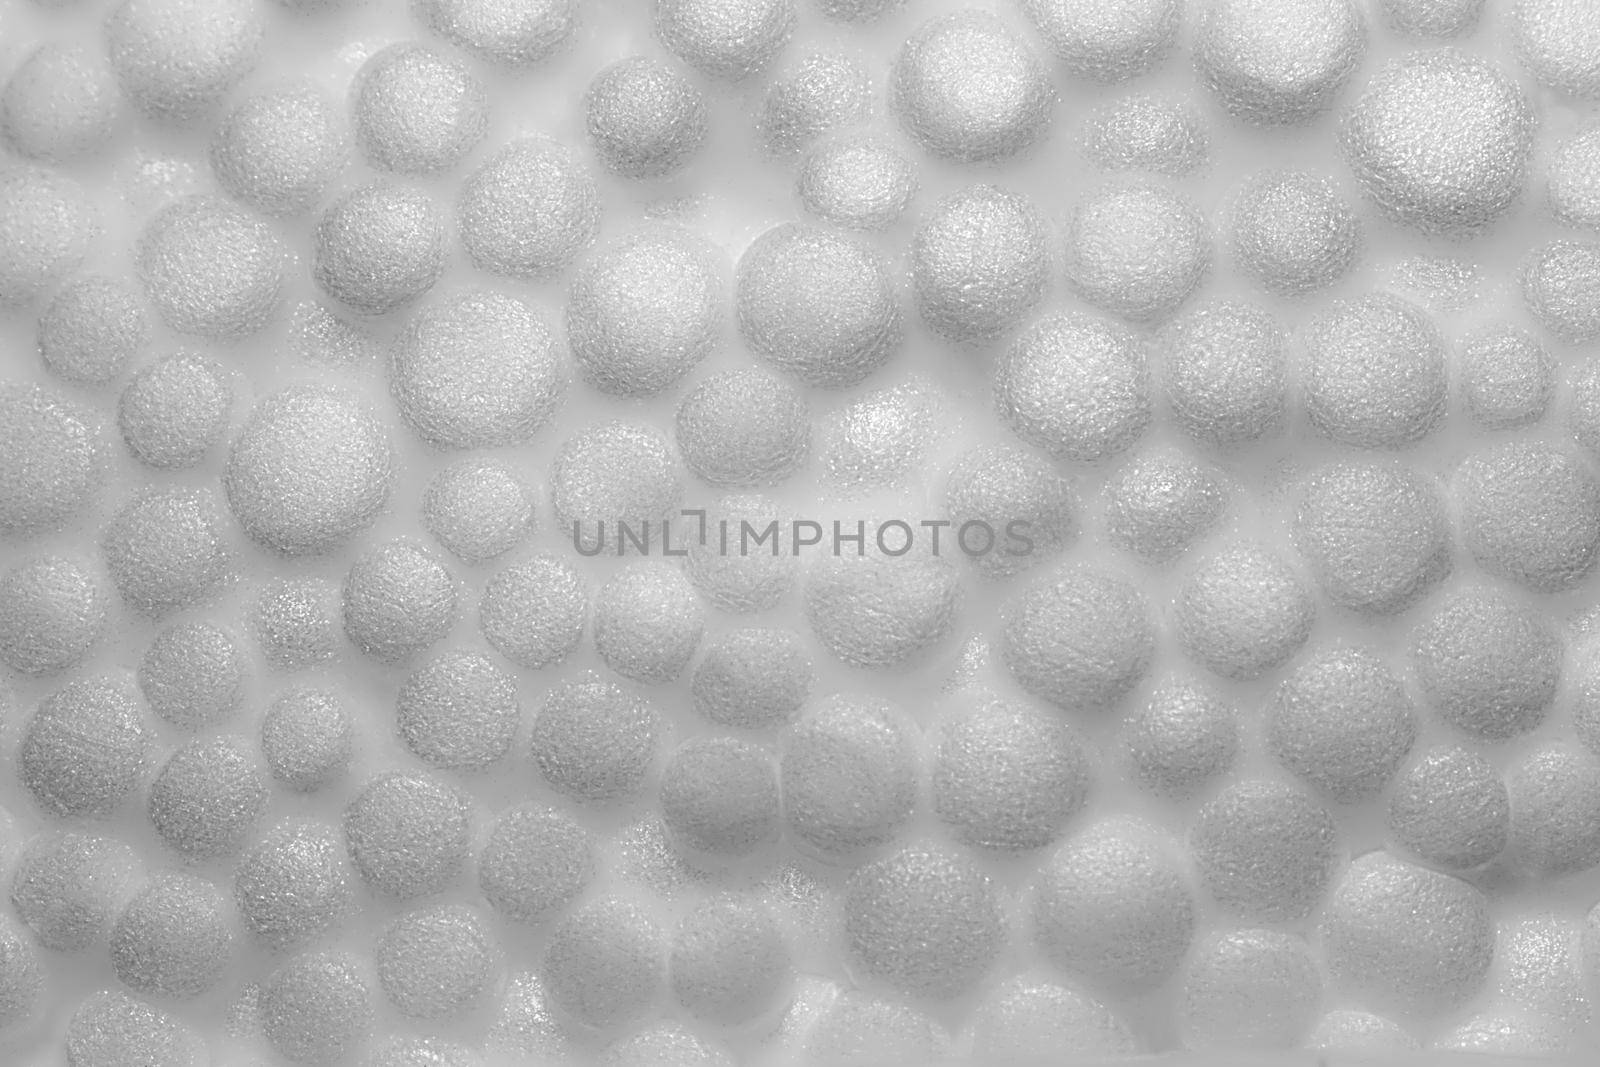 Polystyrene, Styrofoam foam texture. Macro photo close-up view by clusterx